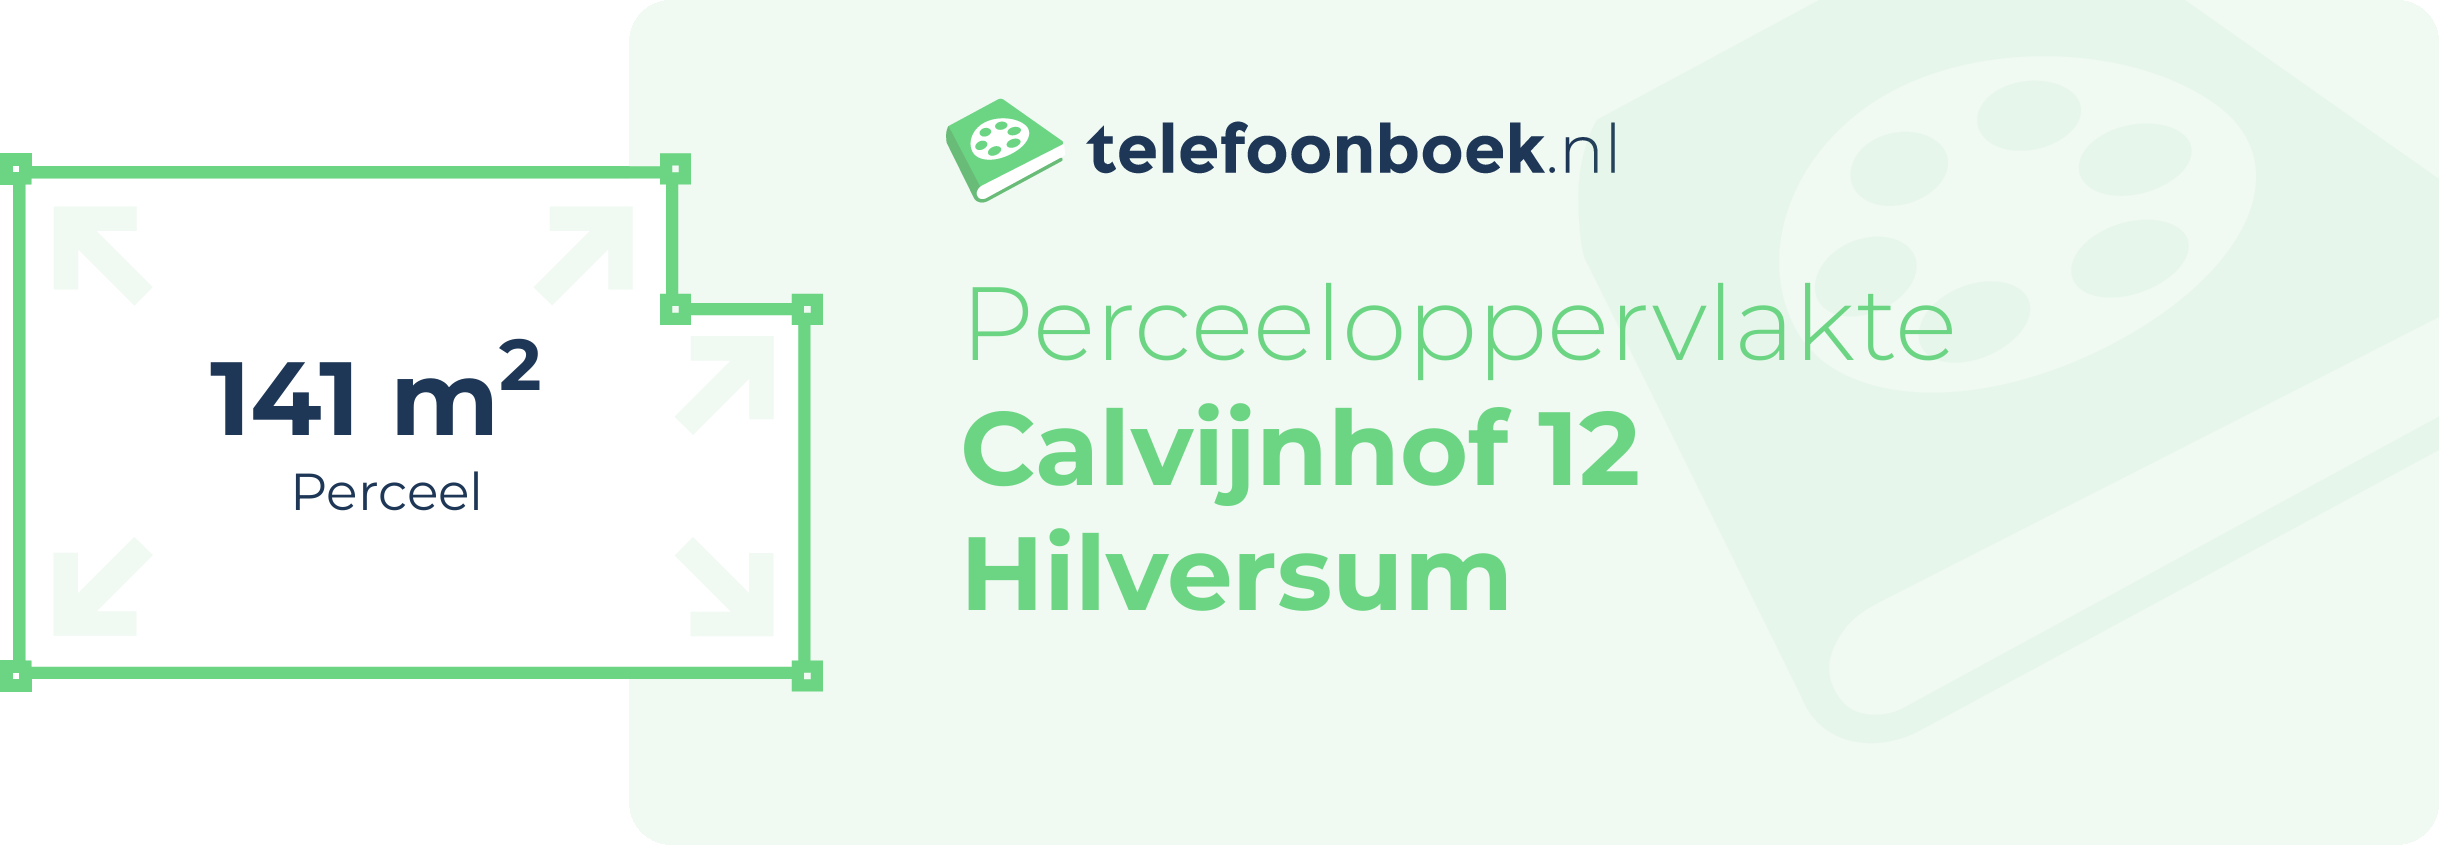 Perceeloppervlakte Calvijnhof 12 Hilversum